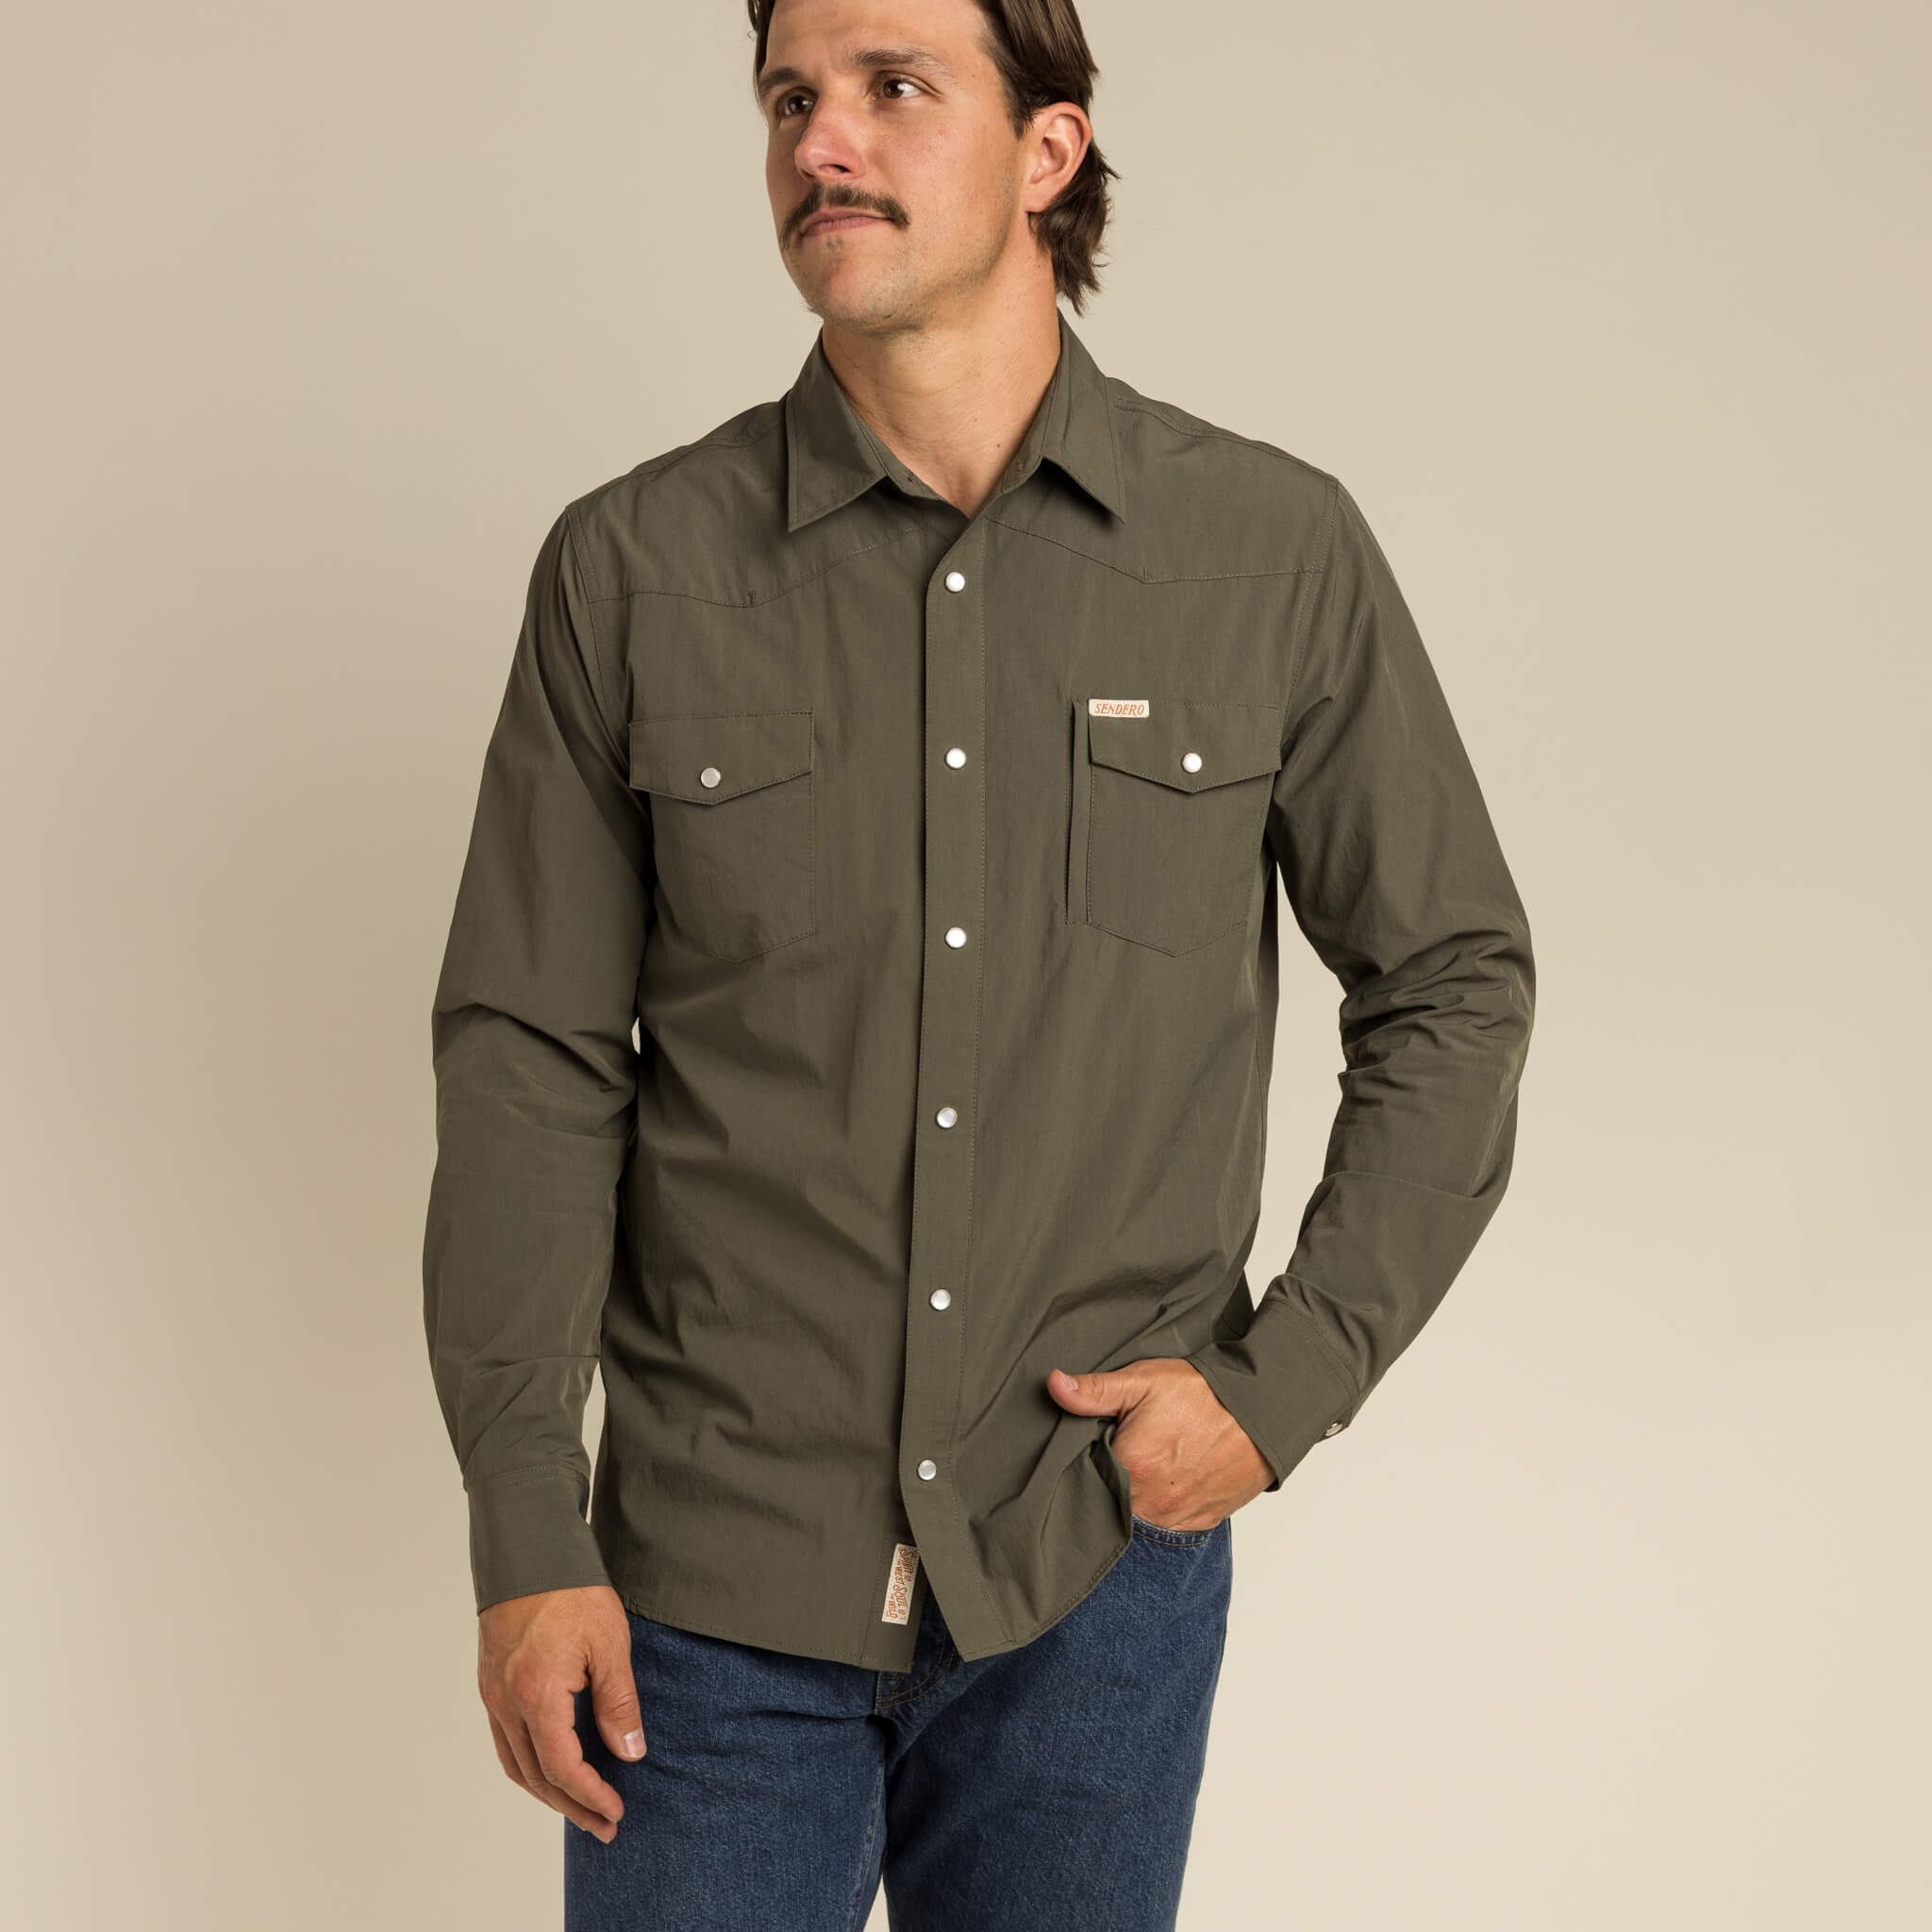 Sendero Provisions Co. Confluence Tech Shirt - Men's Field Camo, S